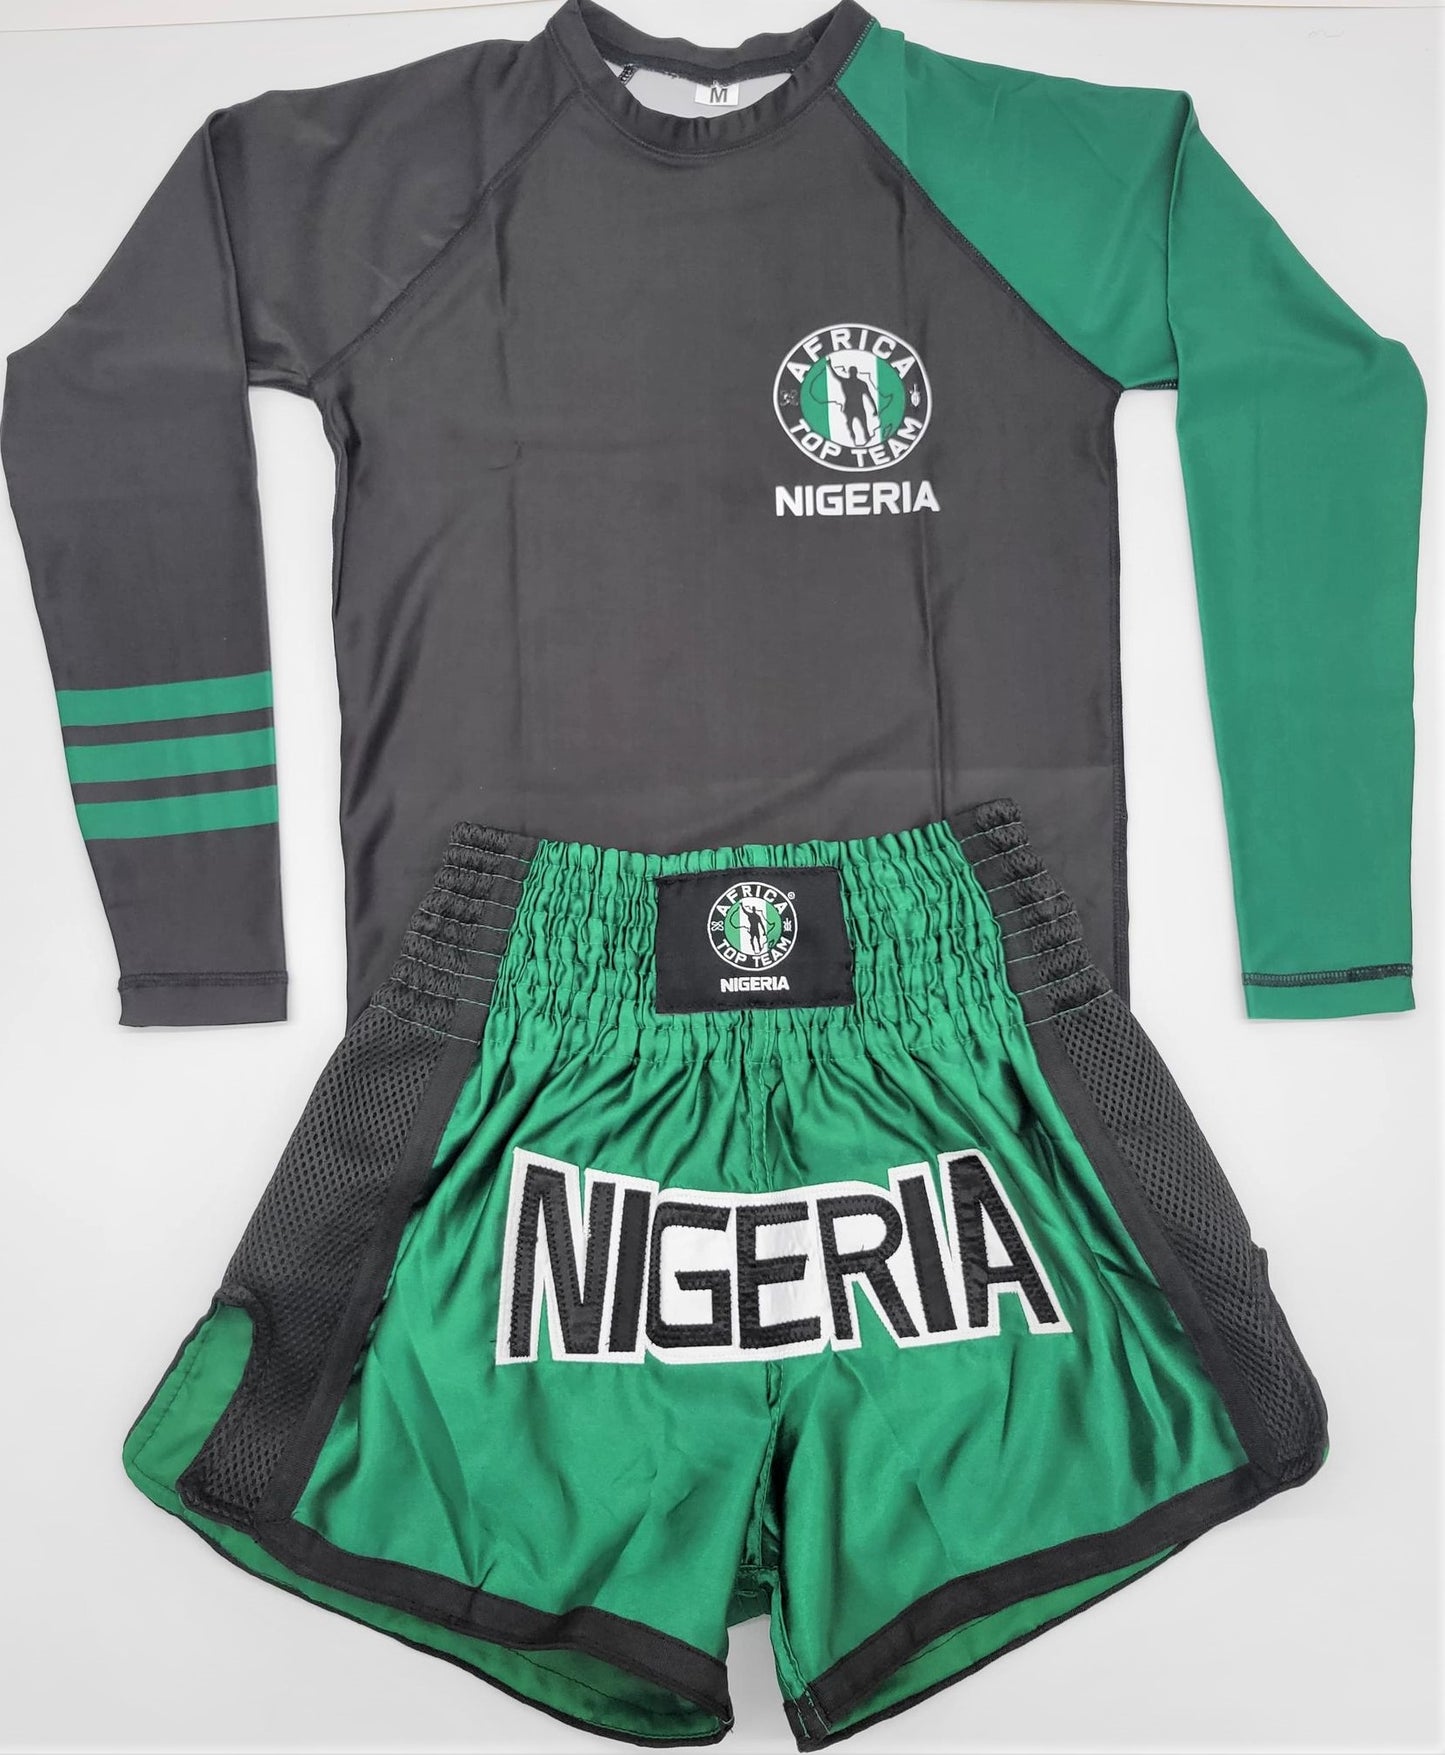 Africa Top Team Nigeria Green/Black Rash guard and Muay Thai Set   Boxing, MMA